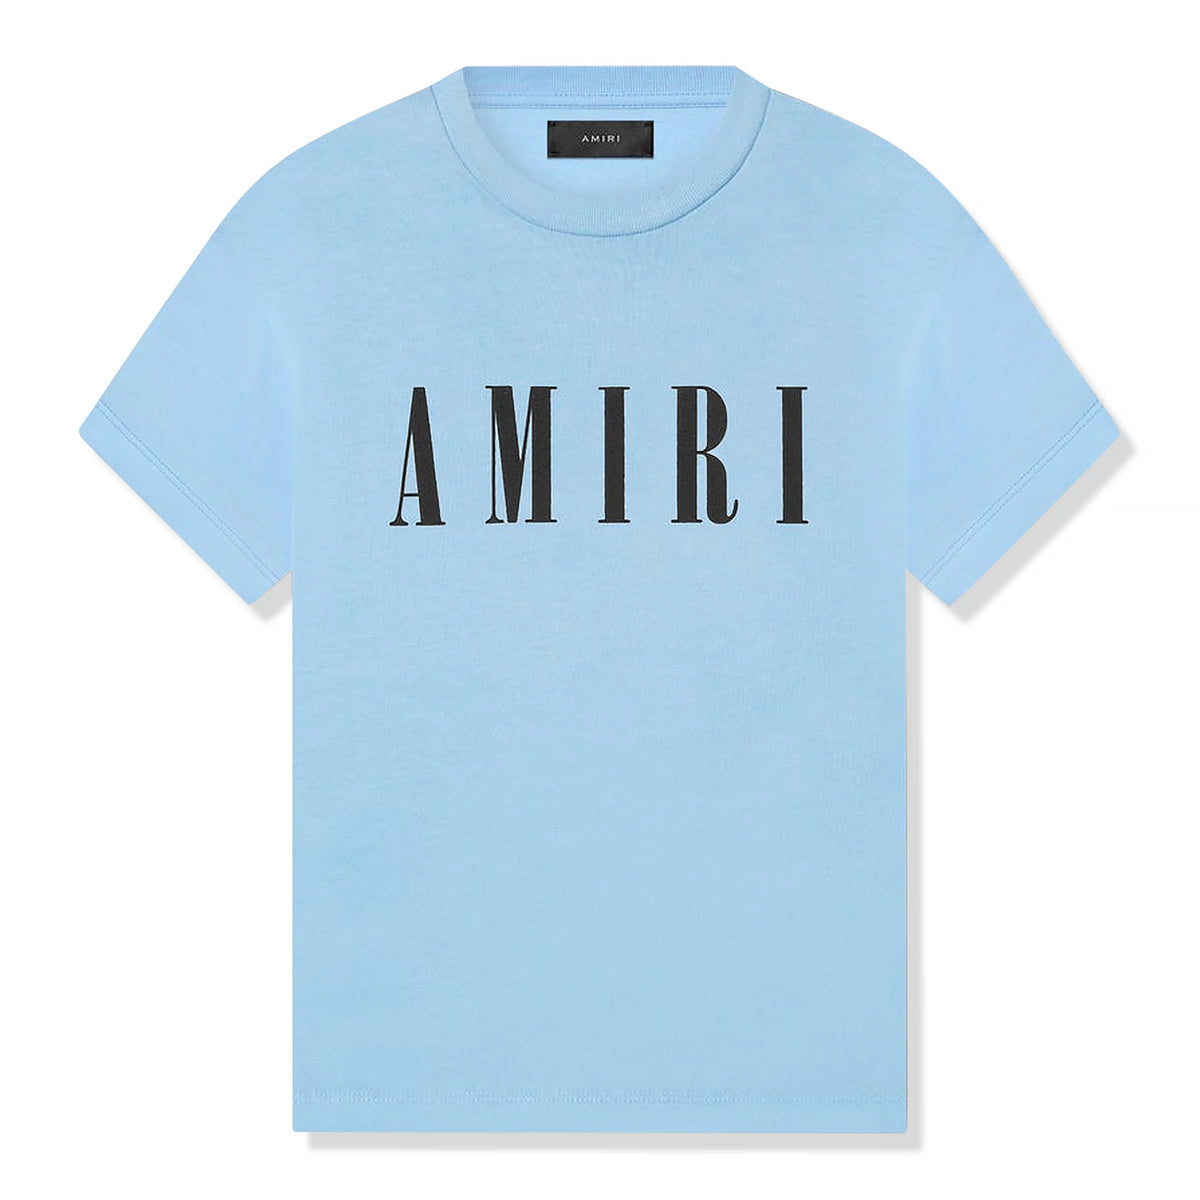 Amiri Kids 'Amiri' Baby Blue T Shirt